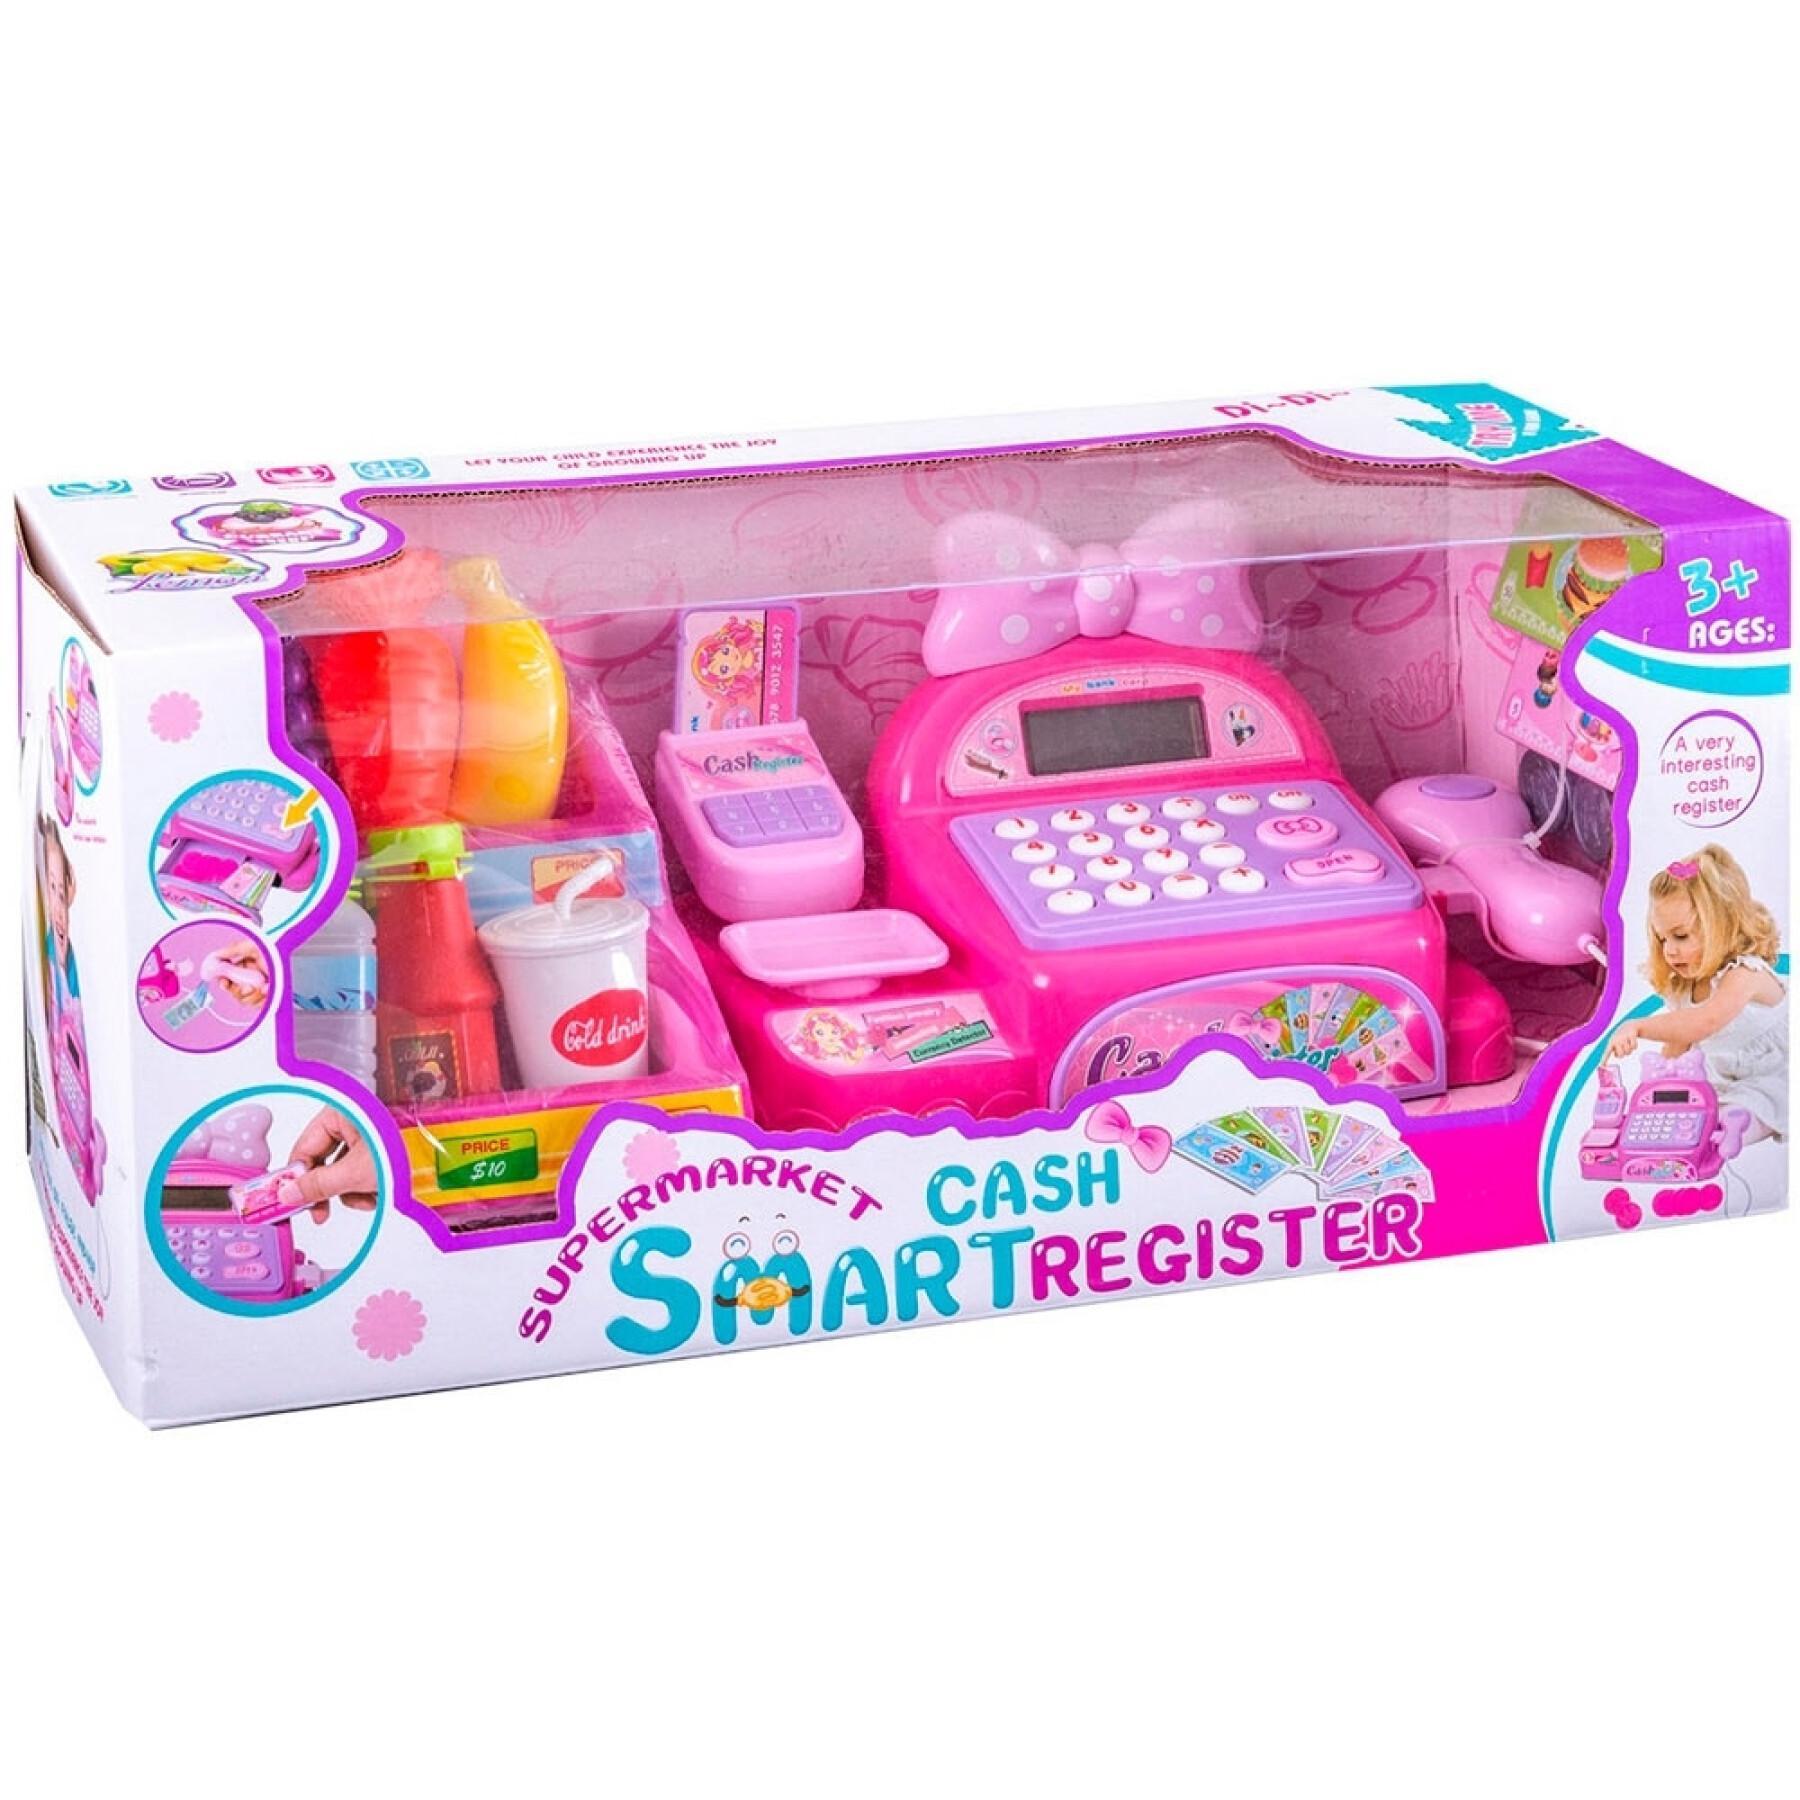 Cash register + calculator Fantastiko